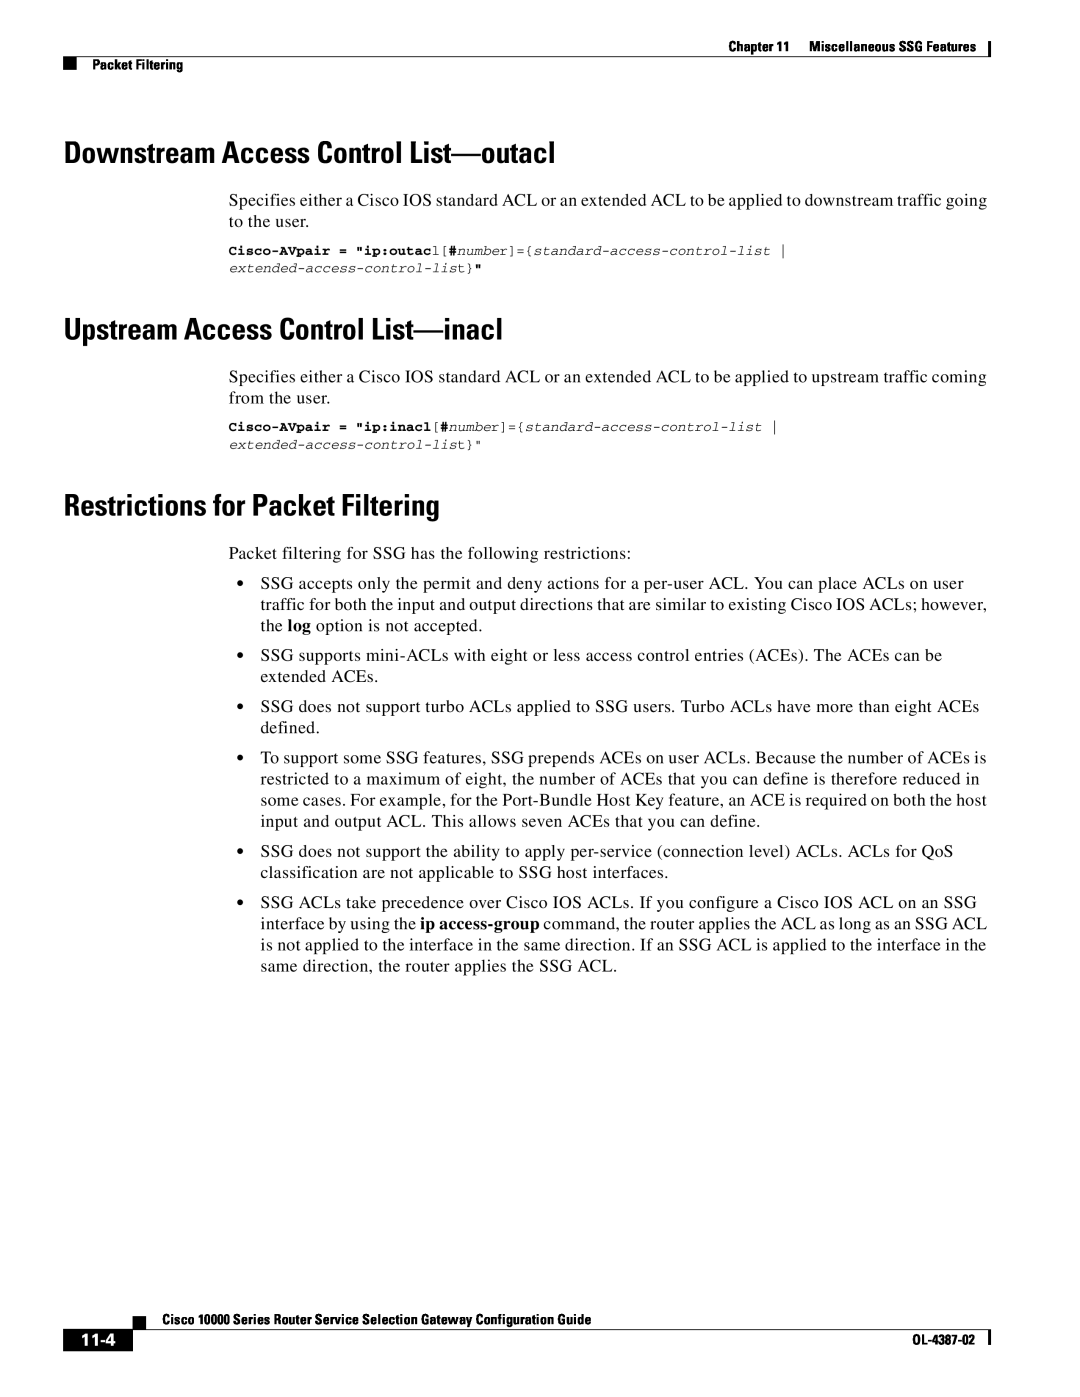 Cisco Systems OL-4387-02 manual Downstream Access Control List-outacl, Upstream Access Control List-inacl, 11-4 